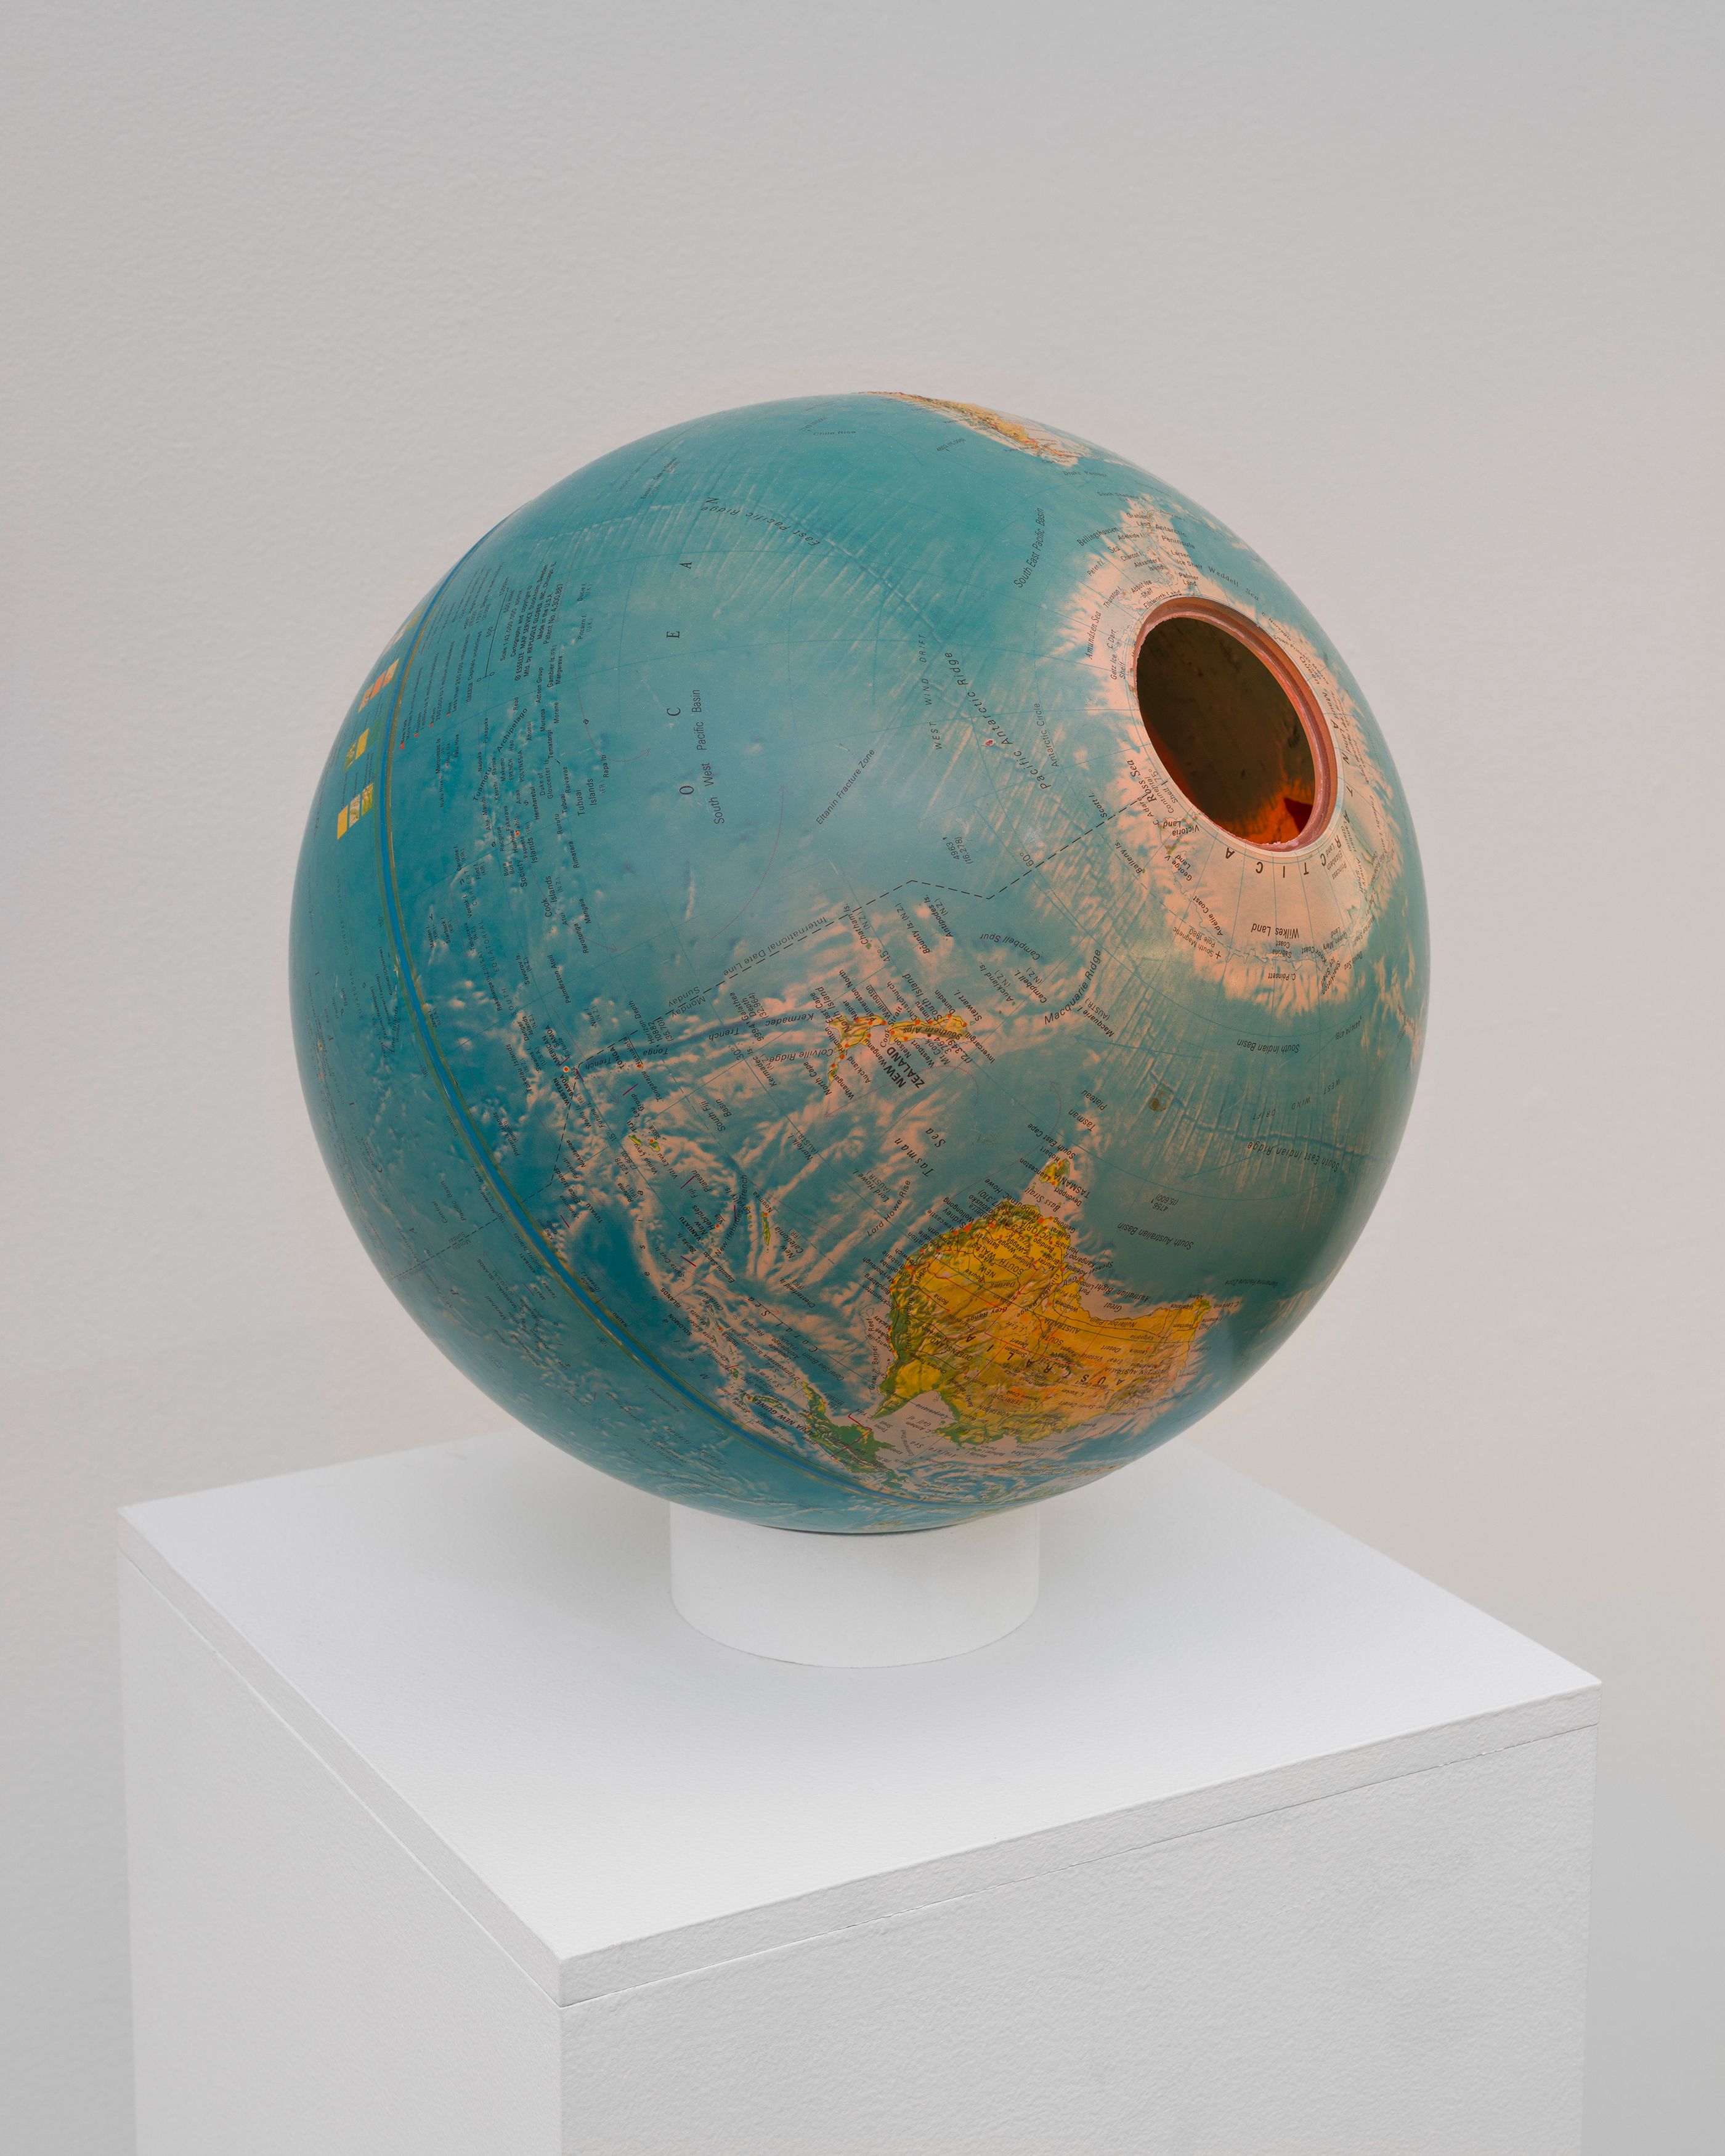 Danny McDonald, Title Forthcoming, 2022, detail of globe, light, pedestal, 12 x 12 x 13 in. (30.5 x 30.5 x 33 cm), pedestal dimensions: 12 x 12 x 41in. (30.5 x 30.5 x 104.1 cm) 